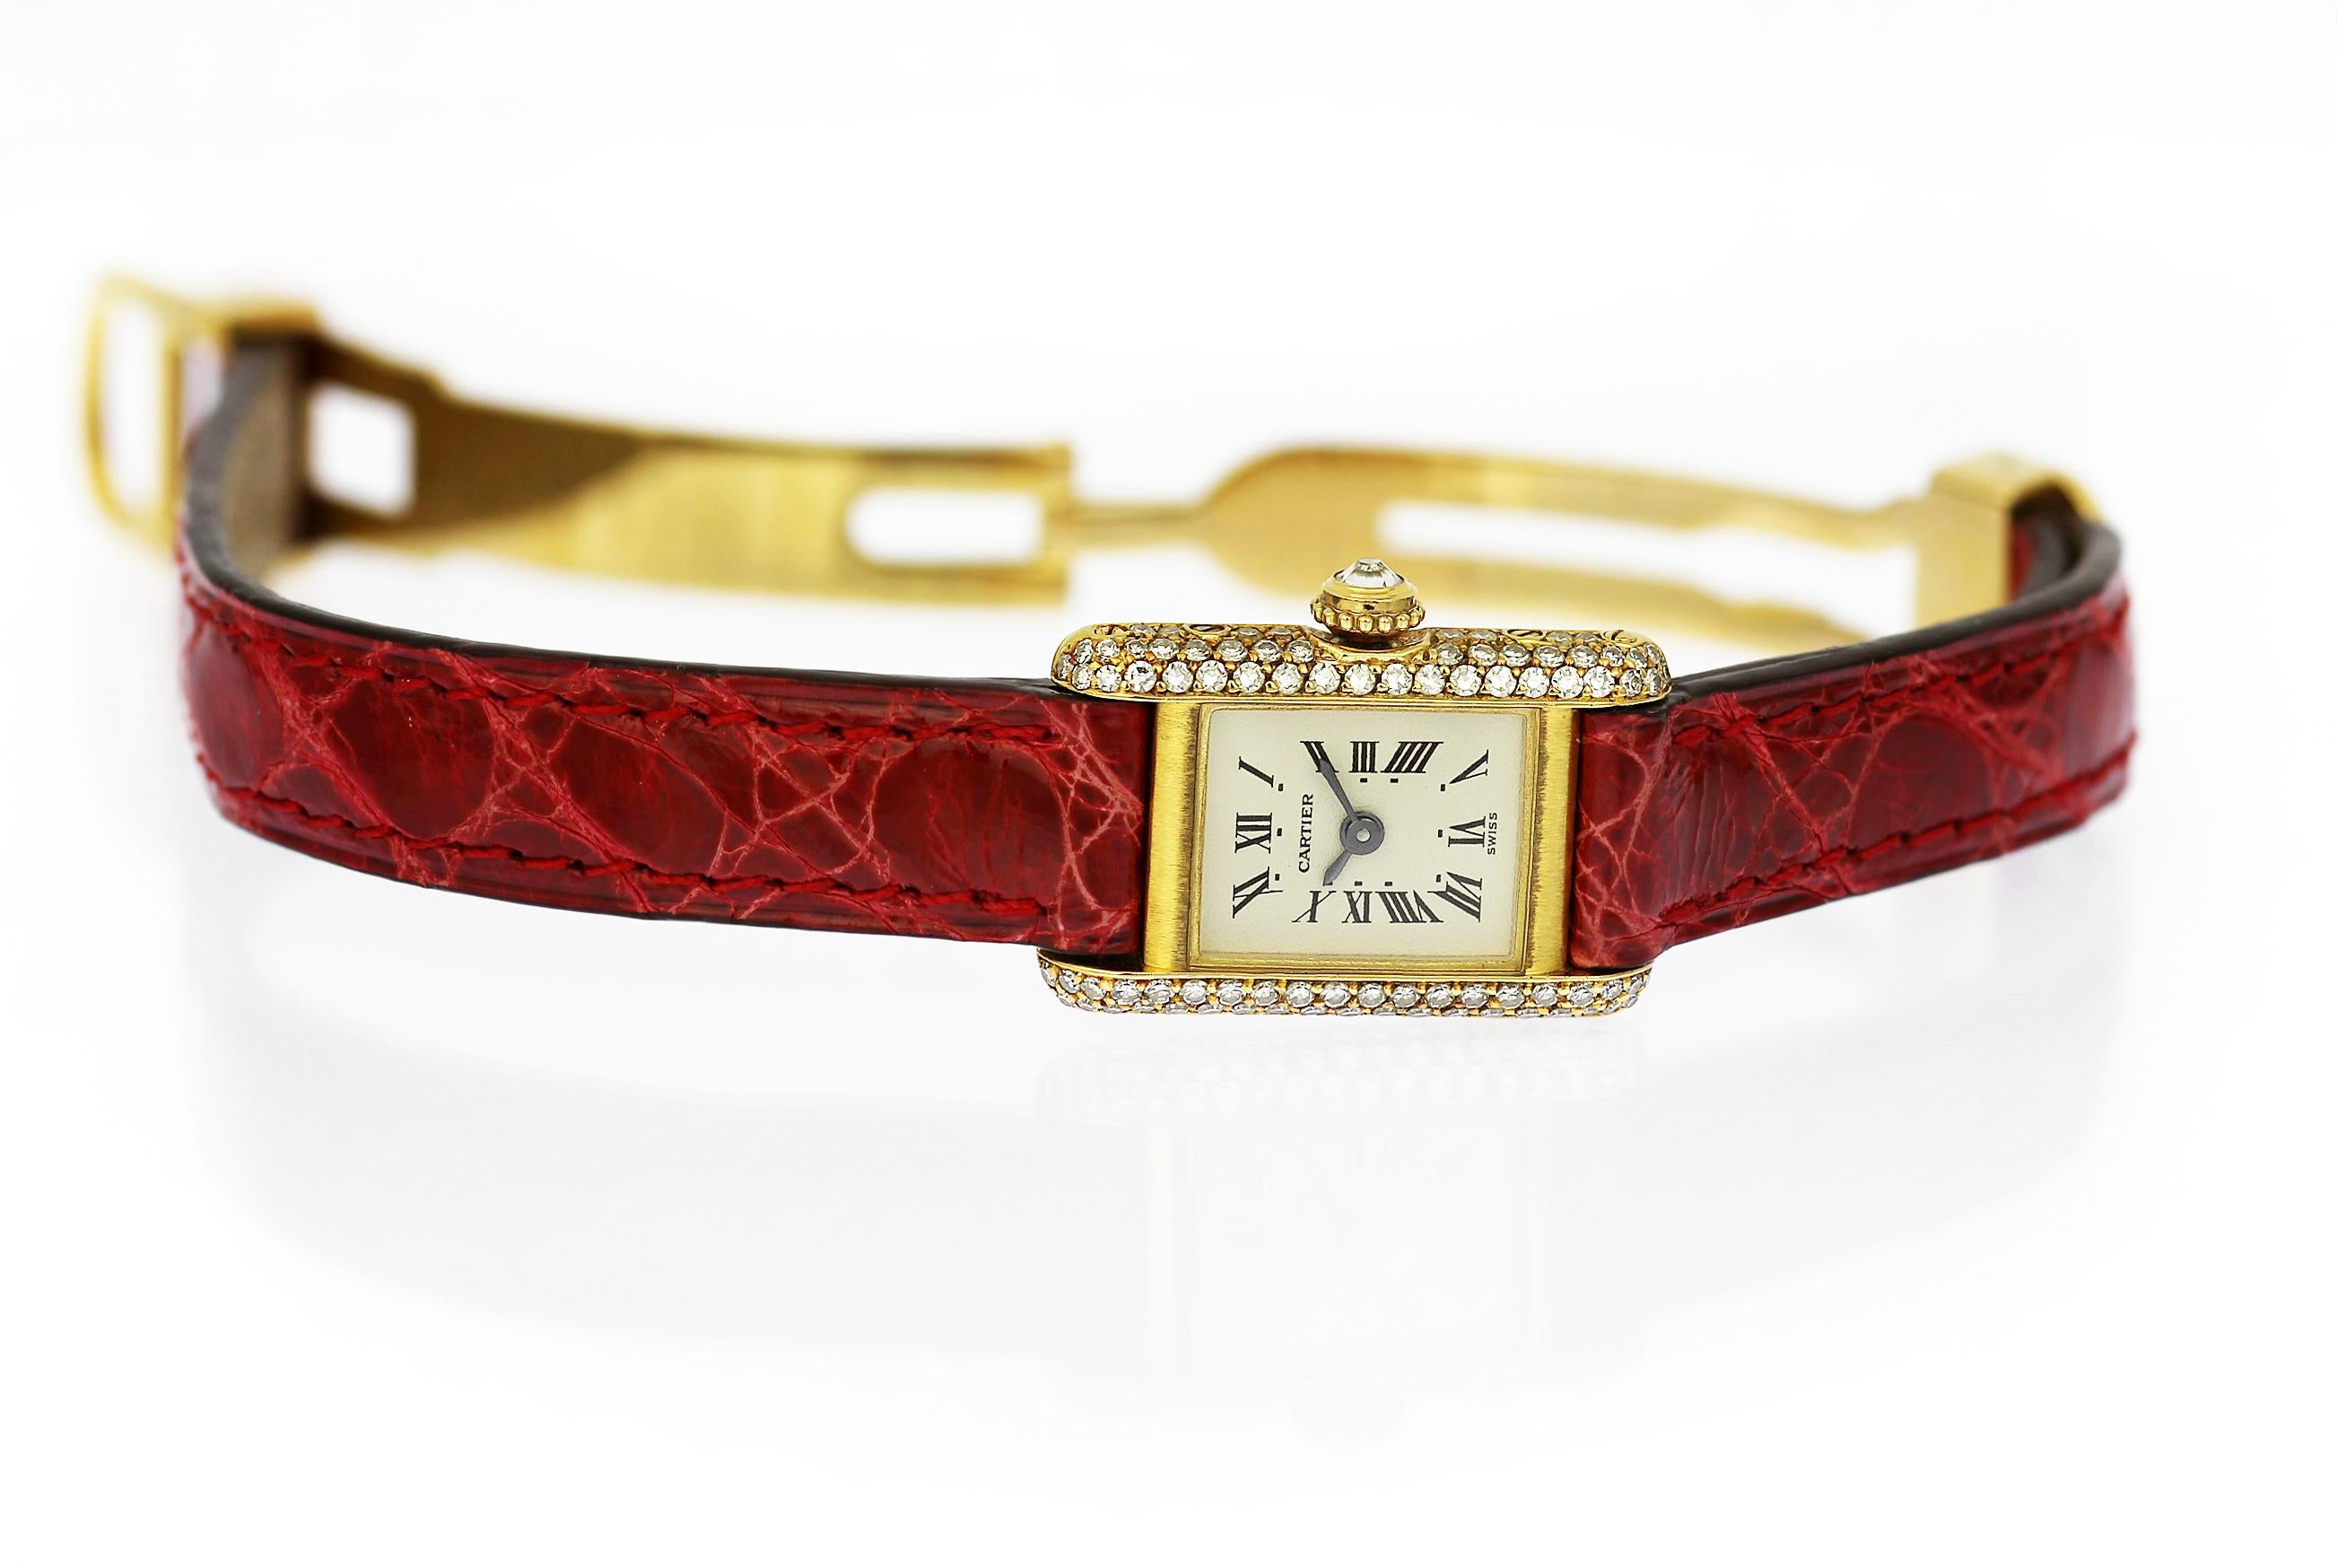 Single Cut Cartier Ladies Tank Watch in 18K Yellow Gold & Diamonds, Original Box